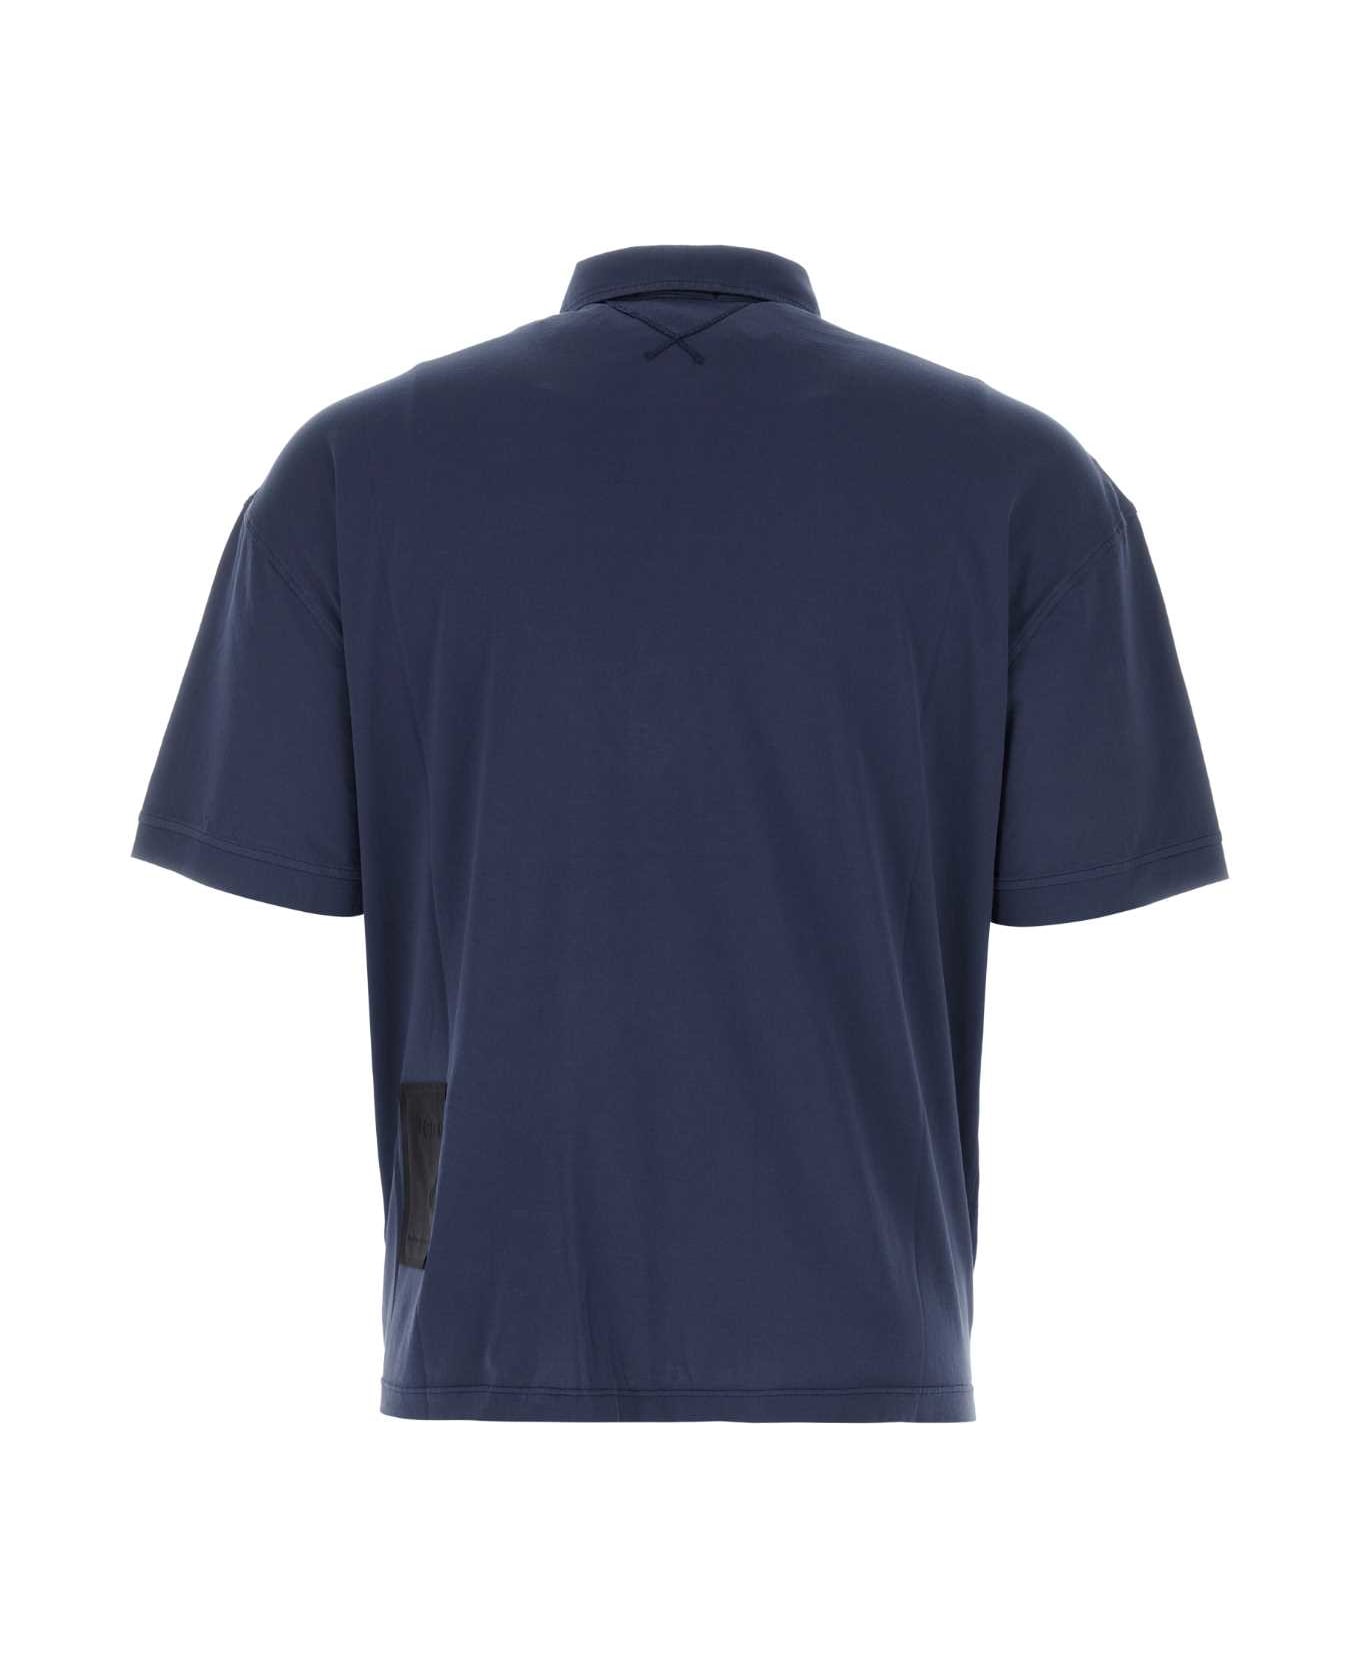 Ten C Navy Blue Cotton Polo Shirt - BLUNOTTE ポロシャツ